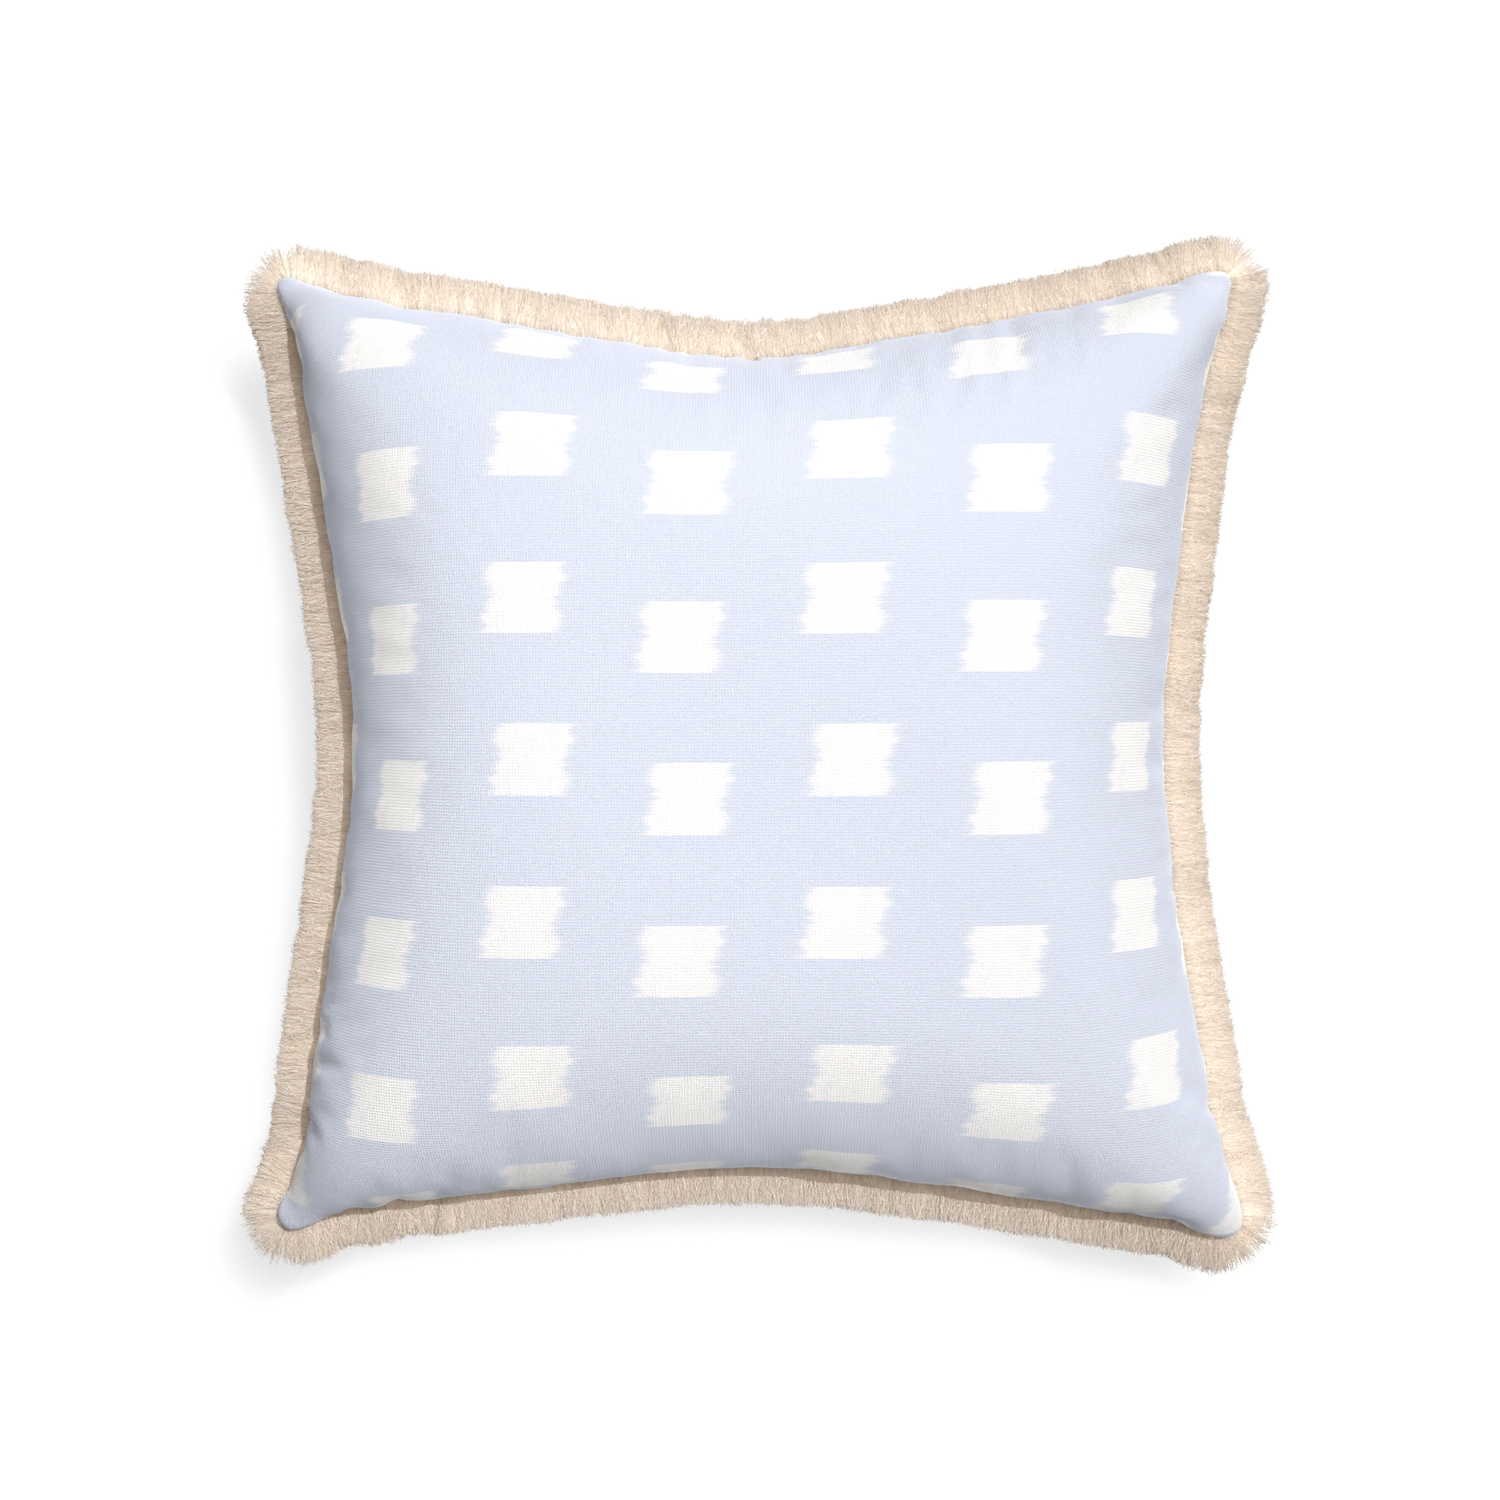 22-square denton custom pillow with cream fringe on white background